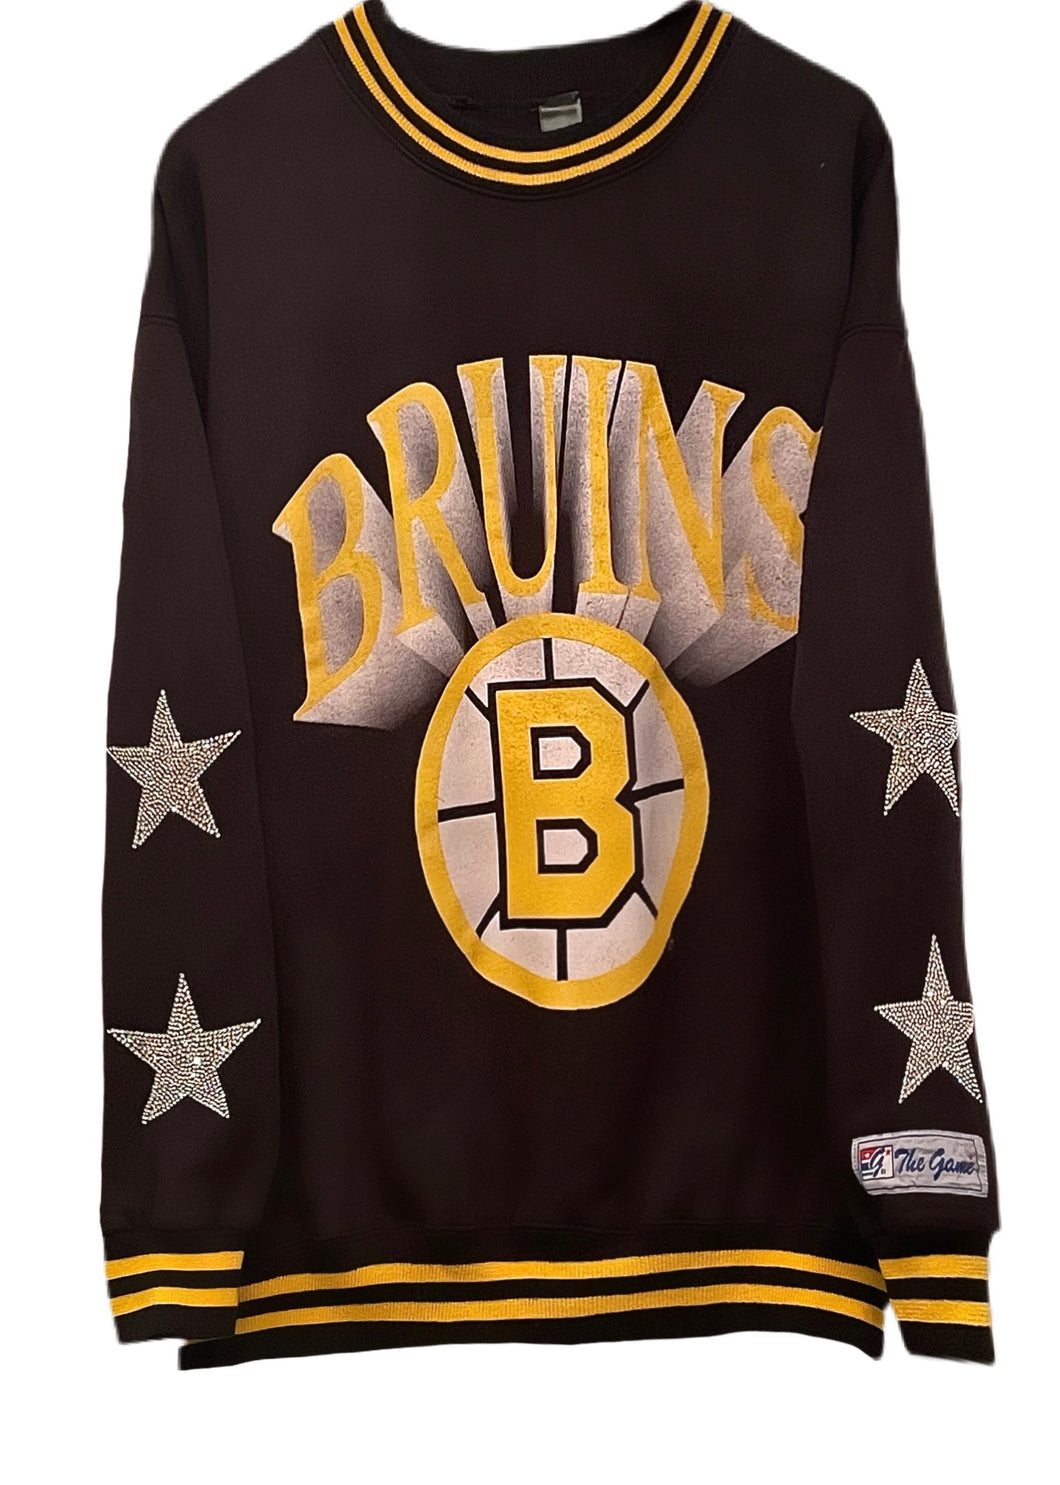 NHL Boston Bruins Native Design CUSTOM Hoodie 